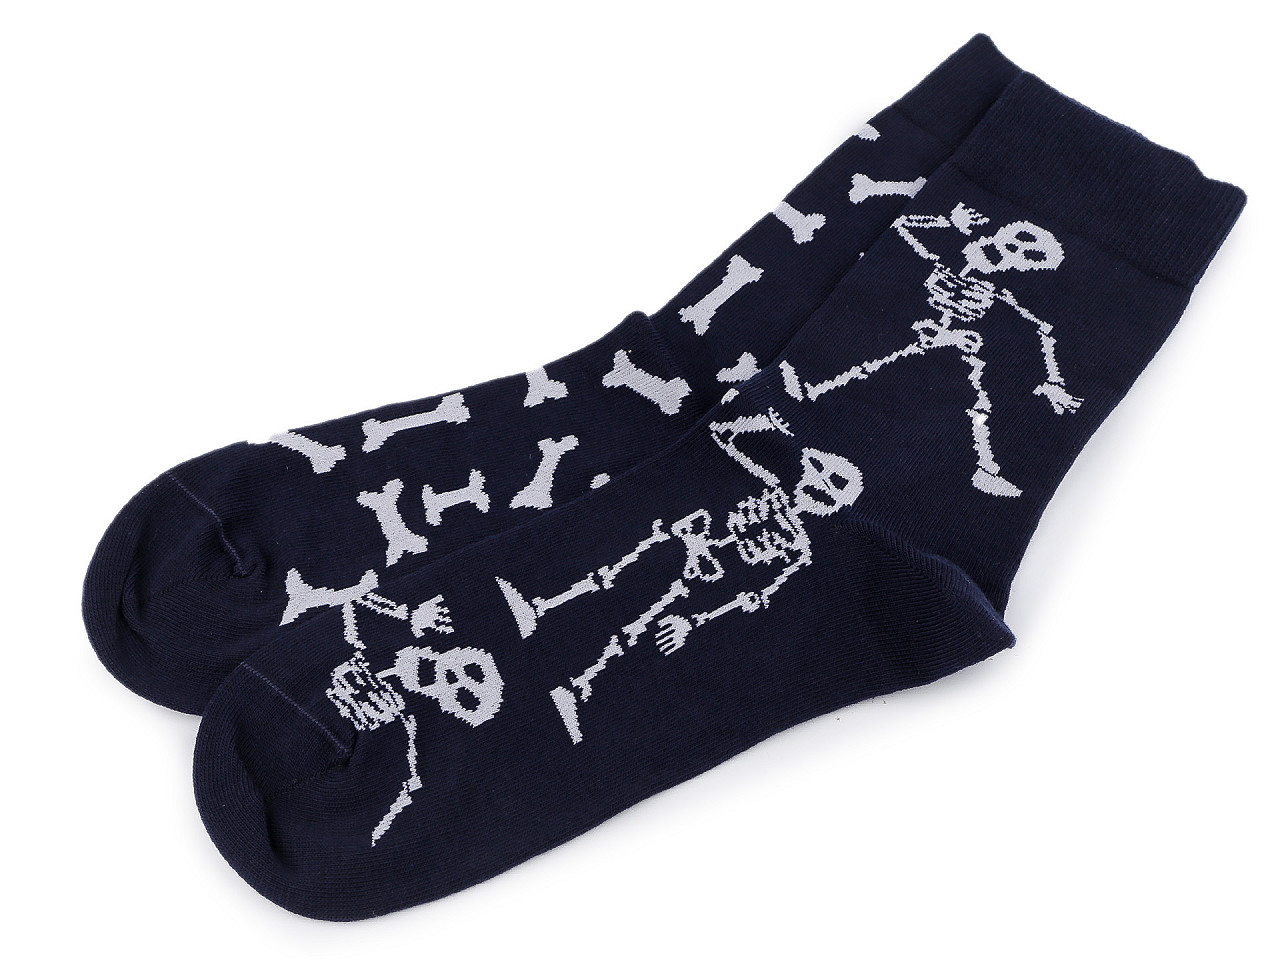 Wola lustige Socken, Baumwolle, (39-43), dunkelblau, 1 Paar